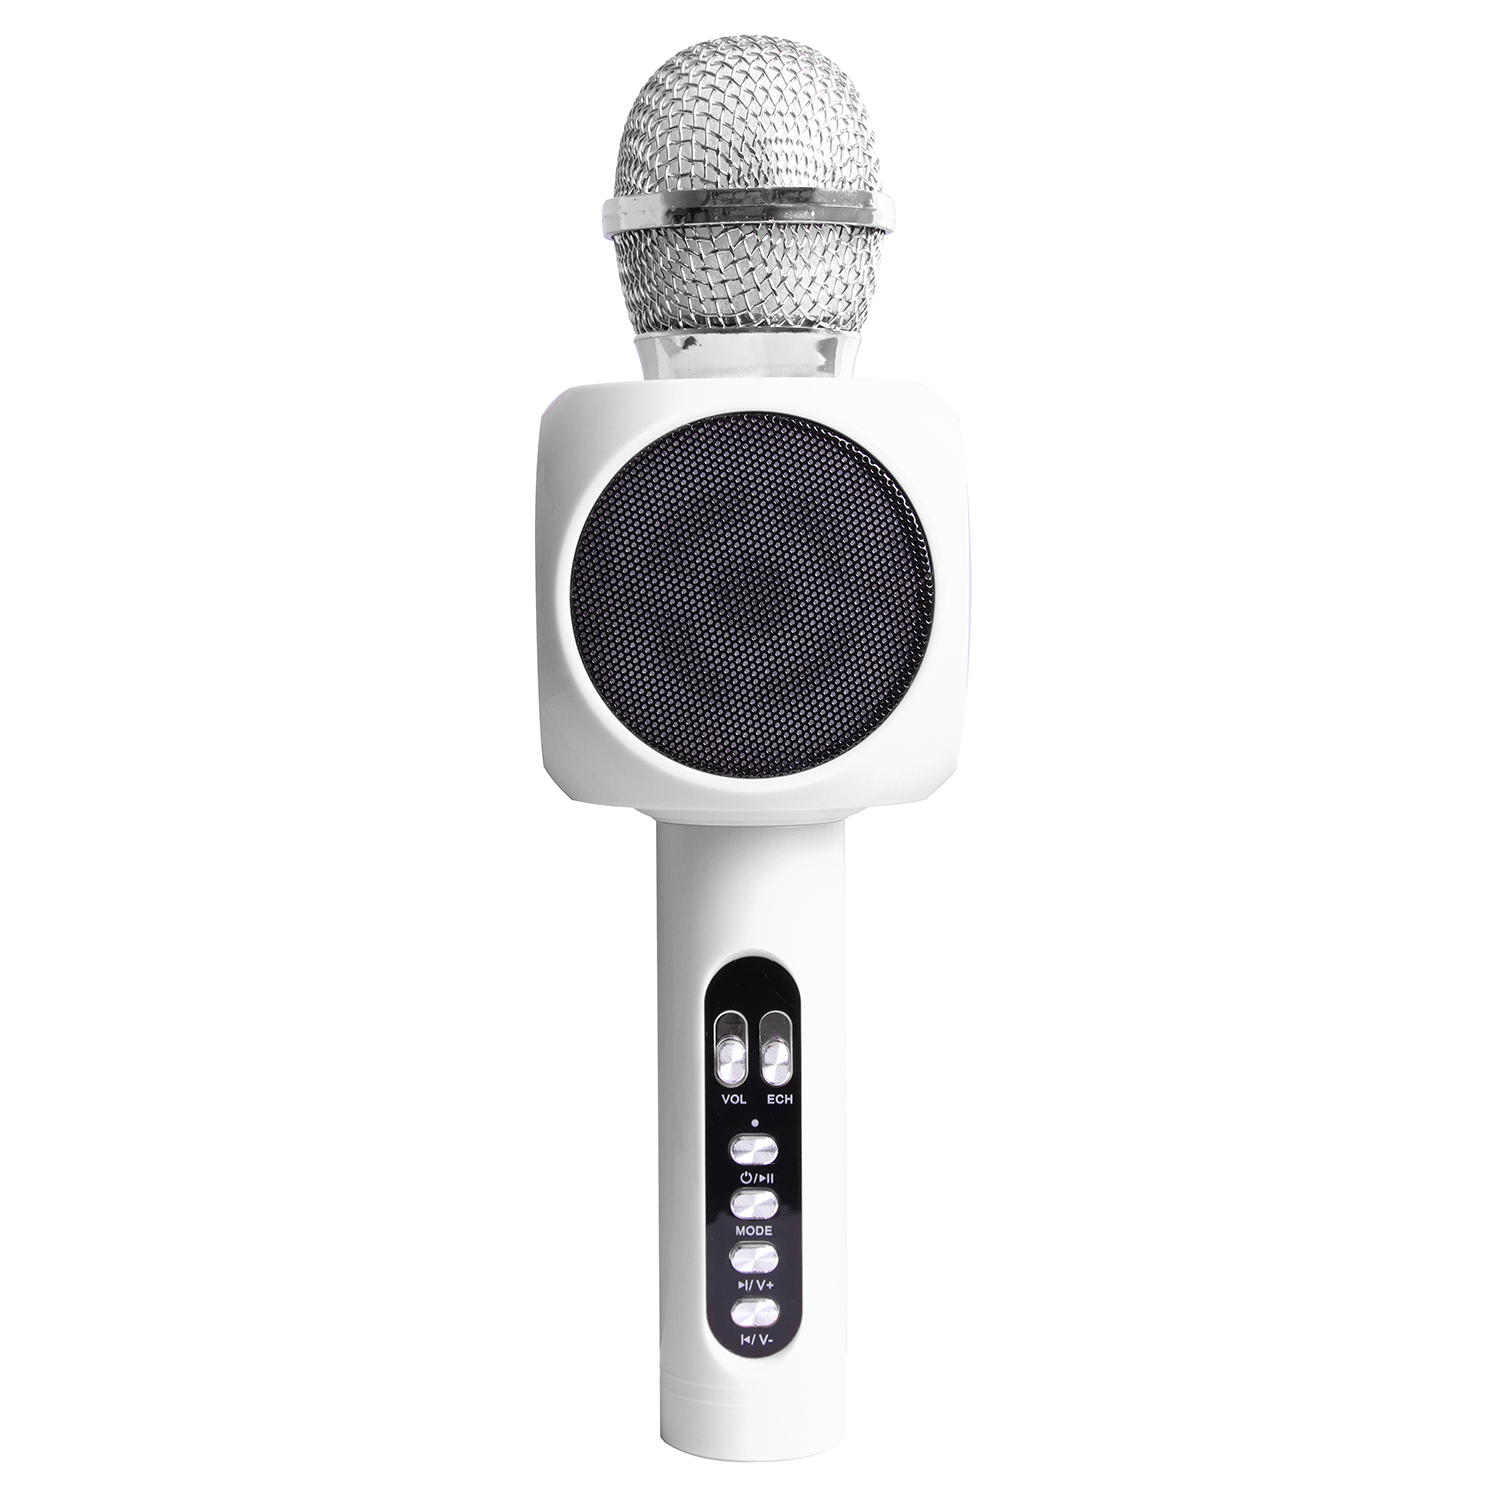 TechXtras Bluetooth Karaoke Microphone White